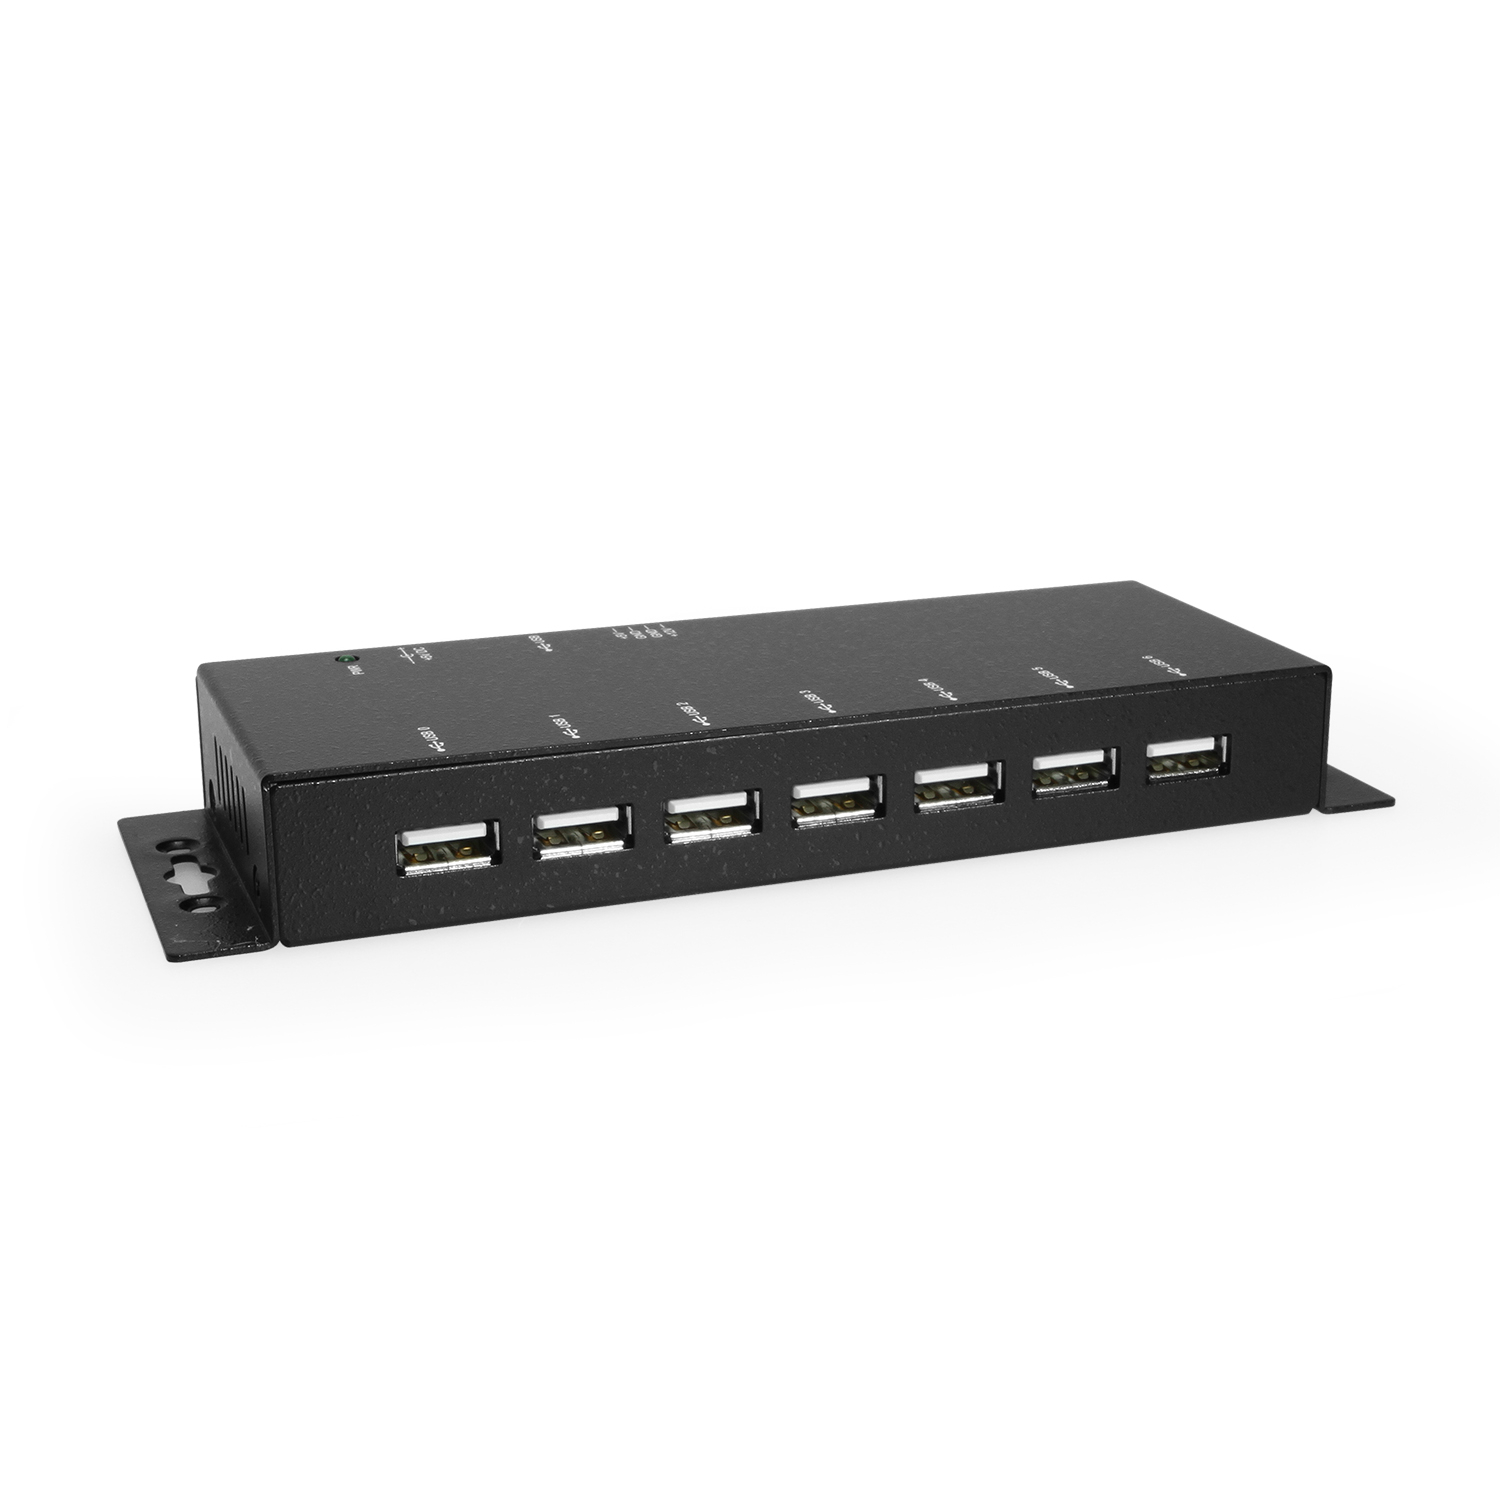 Tilbagekaldelse USA Sicilien Metal 7-Port USB 2.0 Powered Hub for PC-MAC with Power Adapter